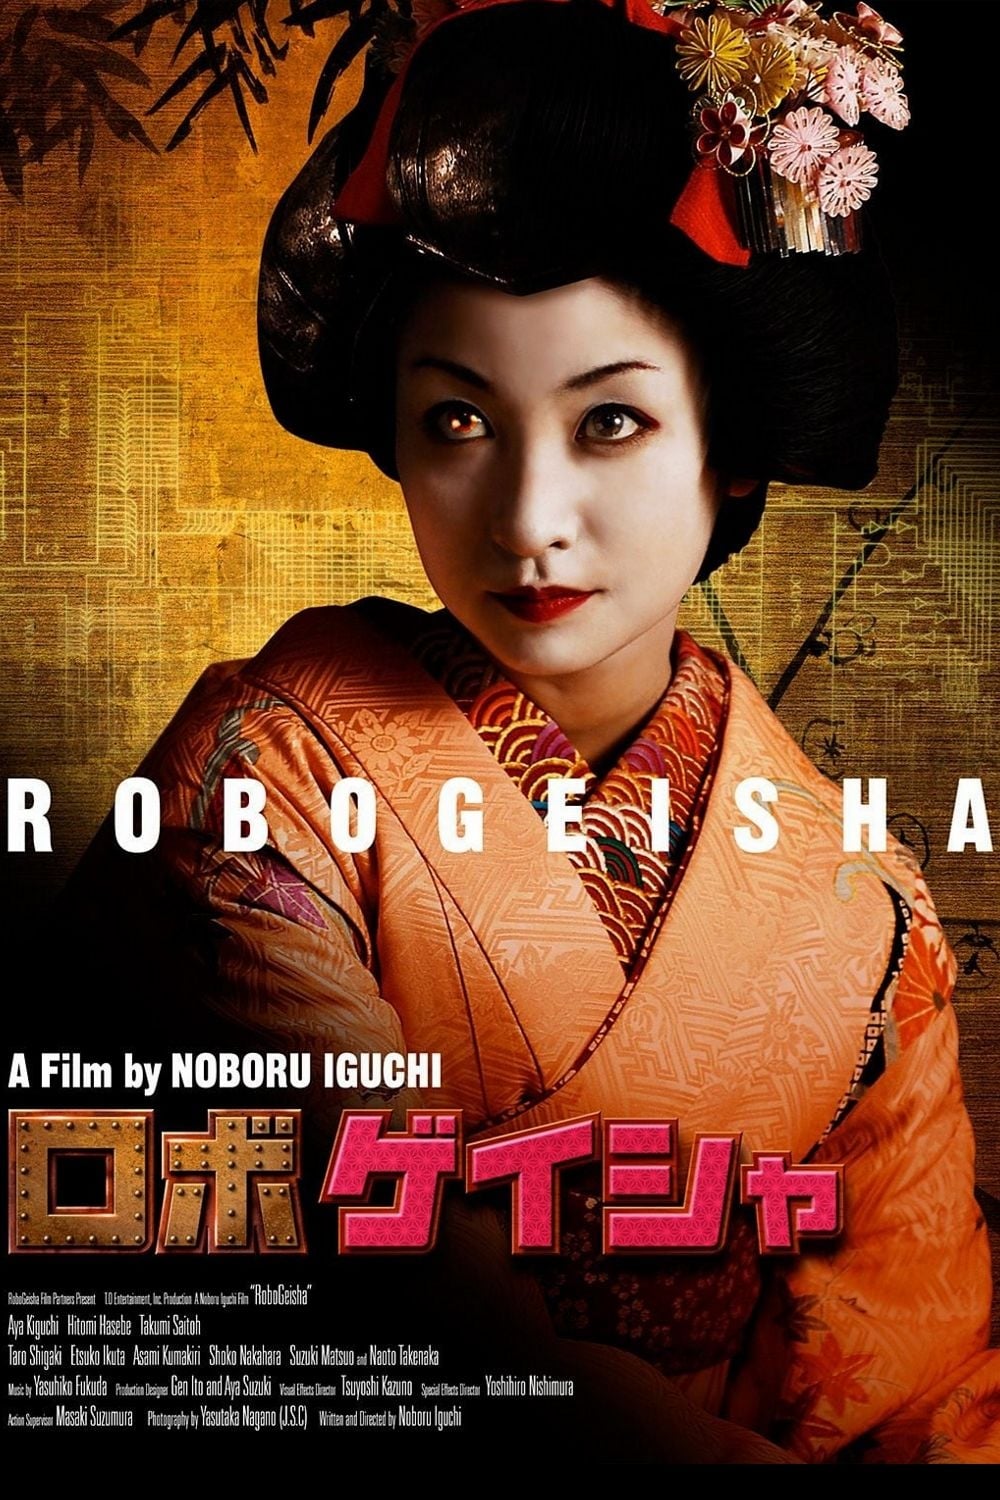 affiche du film Robo-geisha